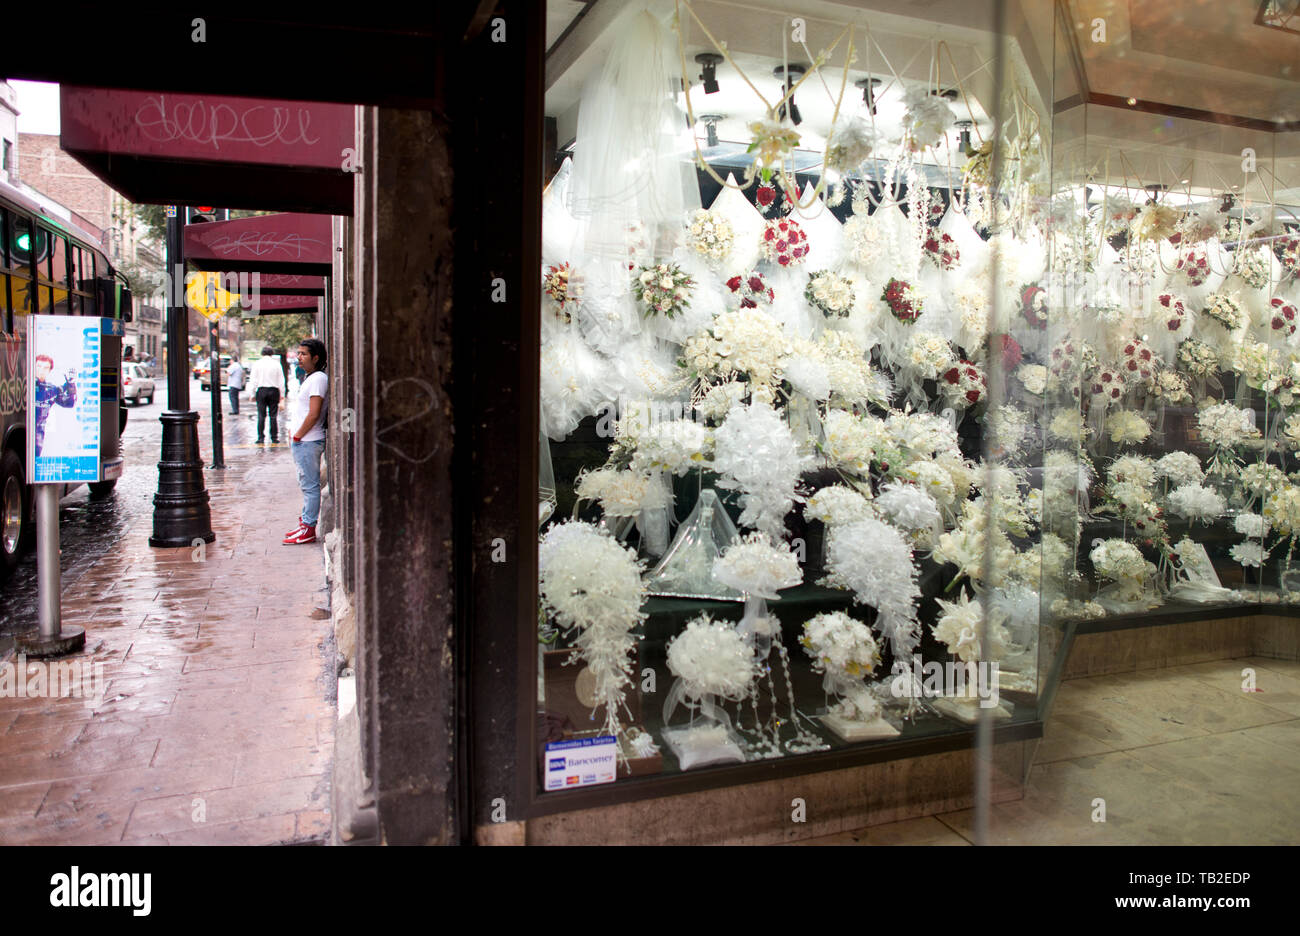 Republica Chile street where all the stores selling bride's dresses is located. centro, centro historico, Mexico City, Mexico Stock Photo - Alamy